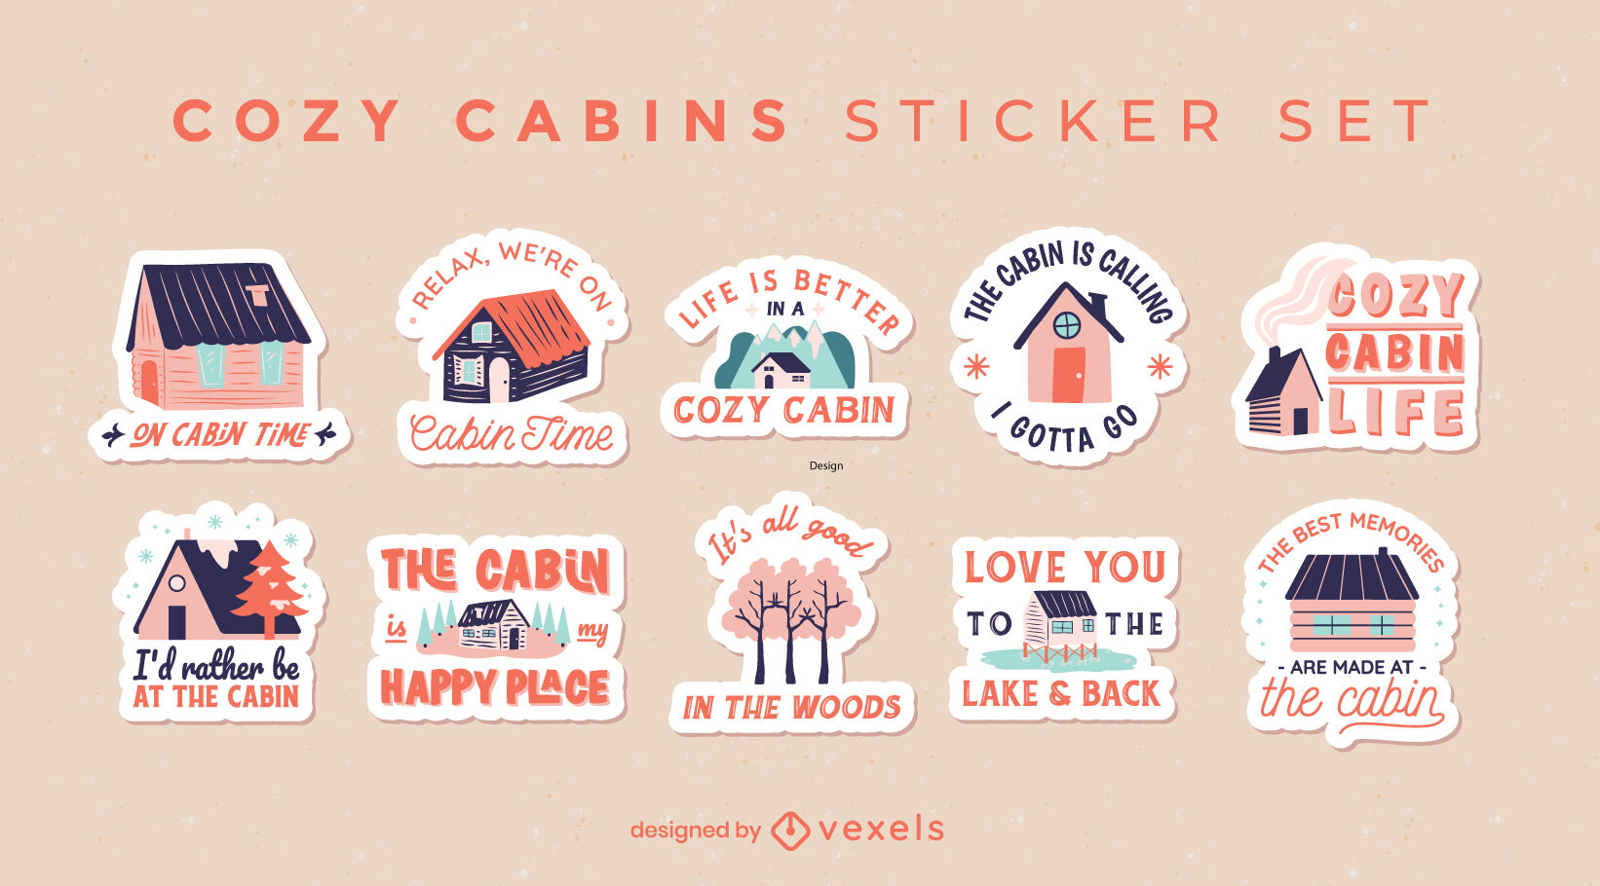 Cozy cabins sticker set